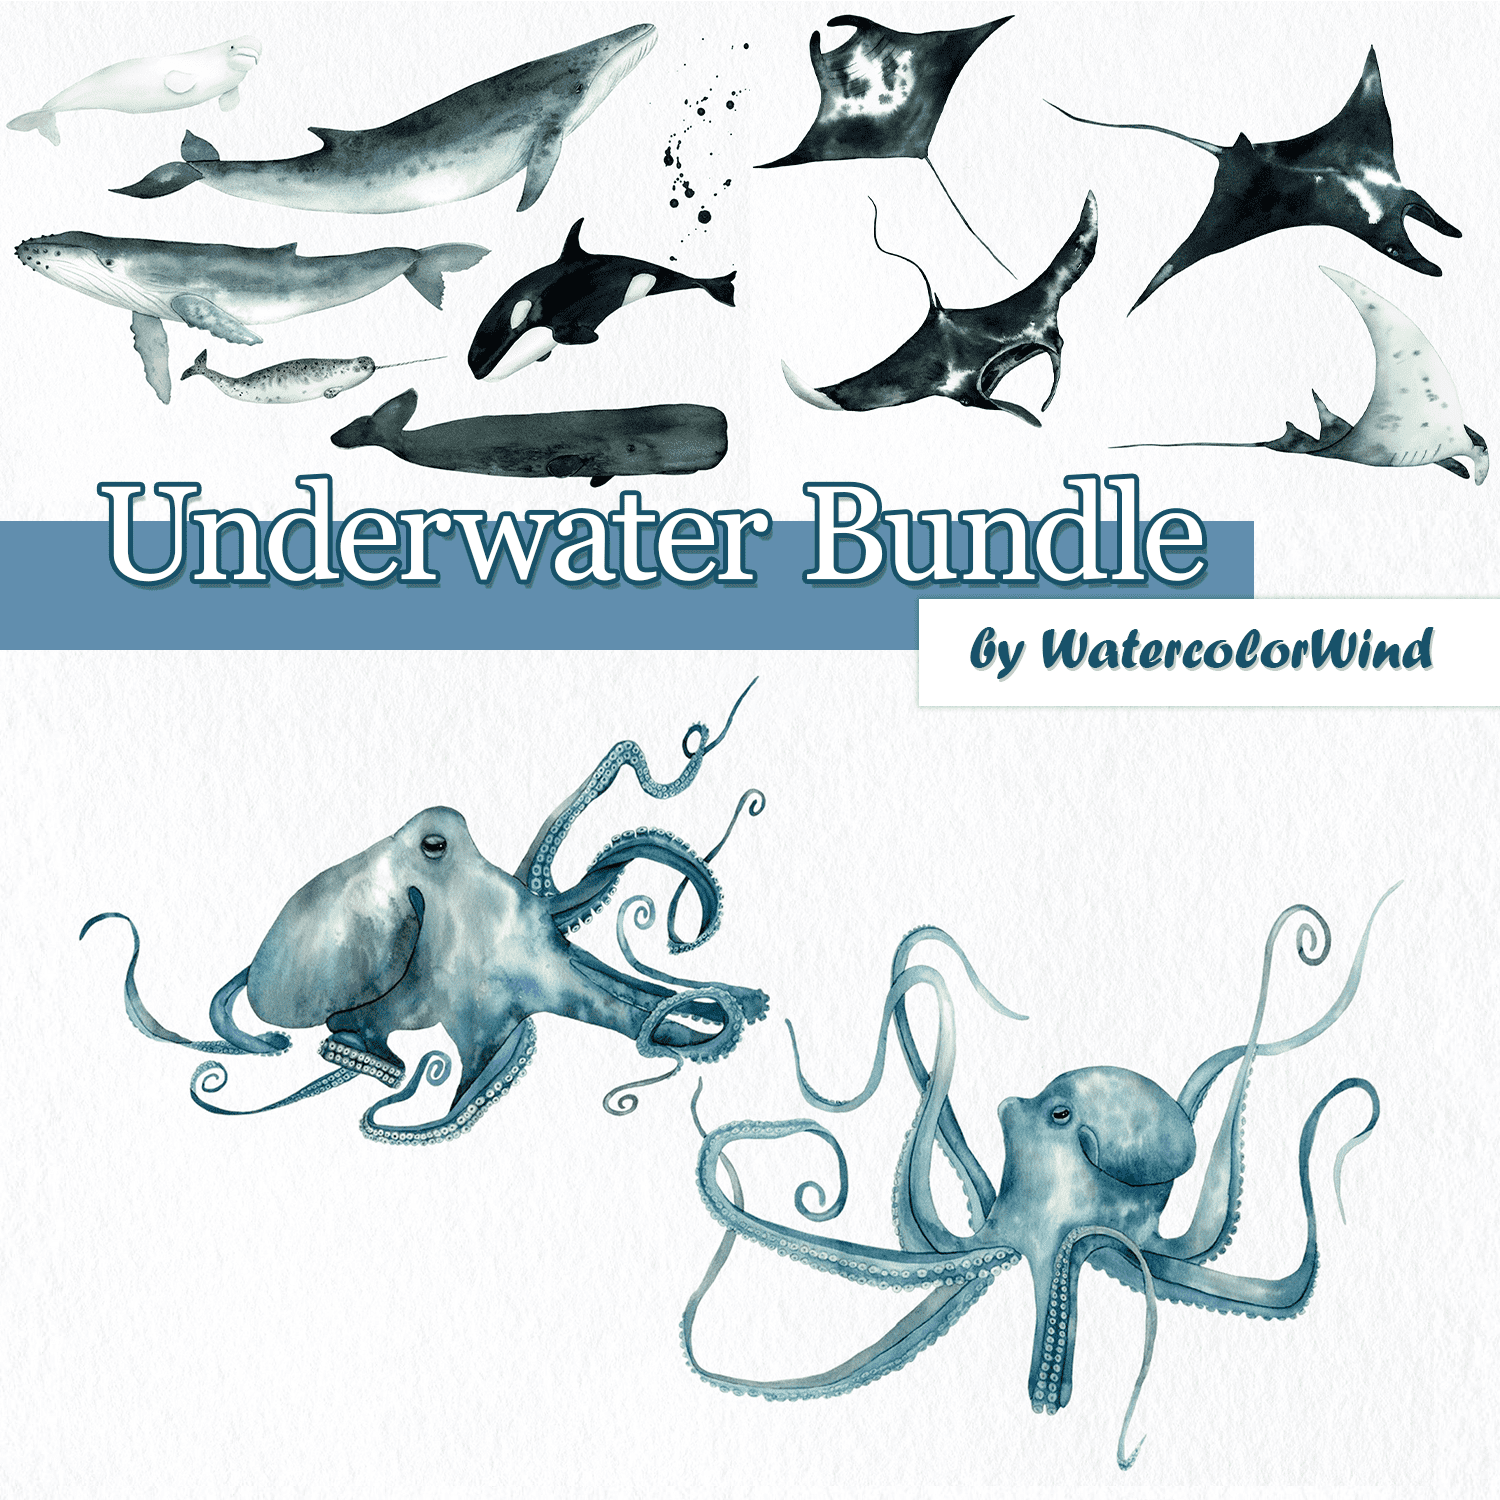 Underwater Bundle cover.